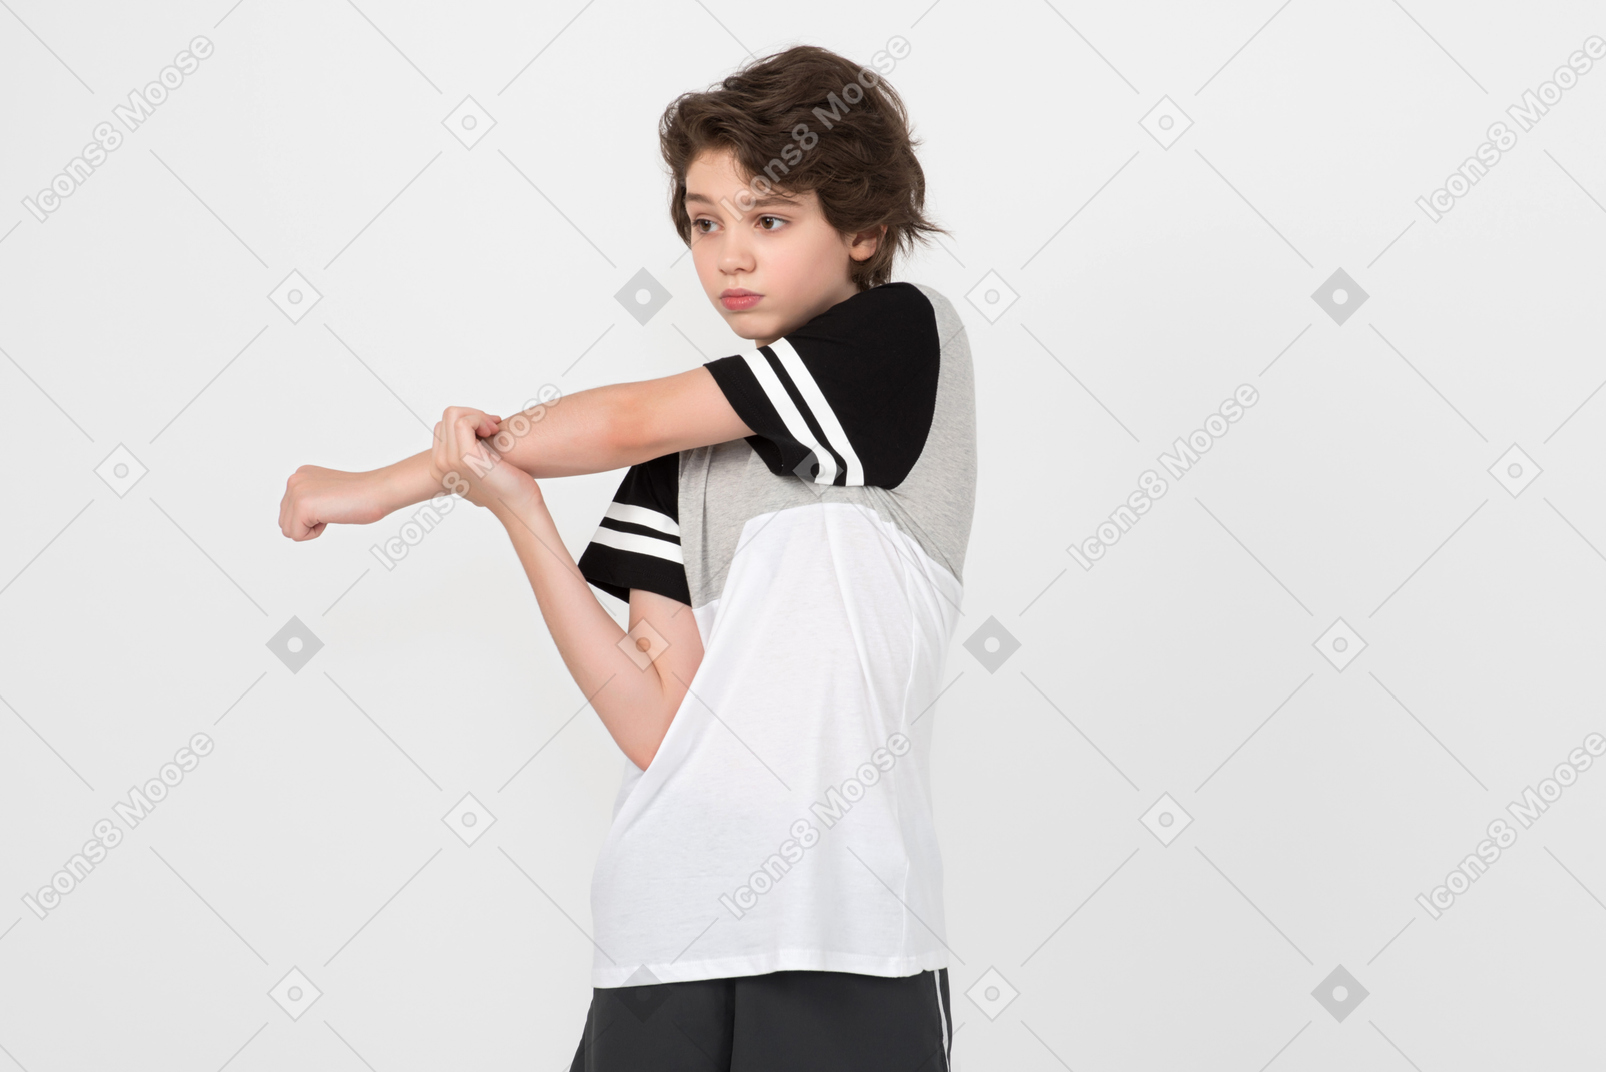 Junge in stretching beteiligt